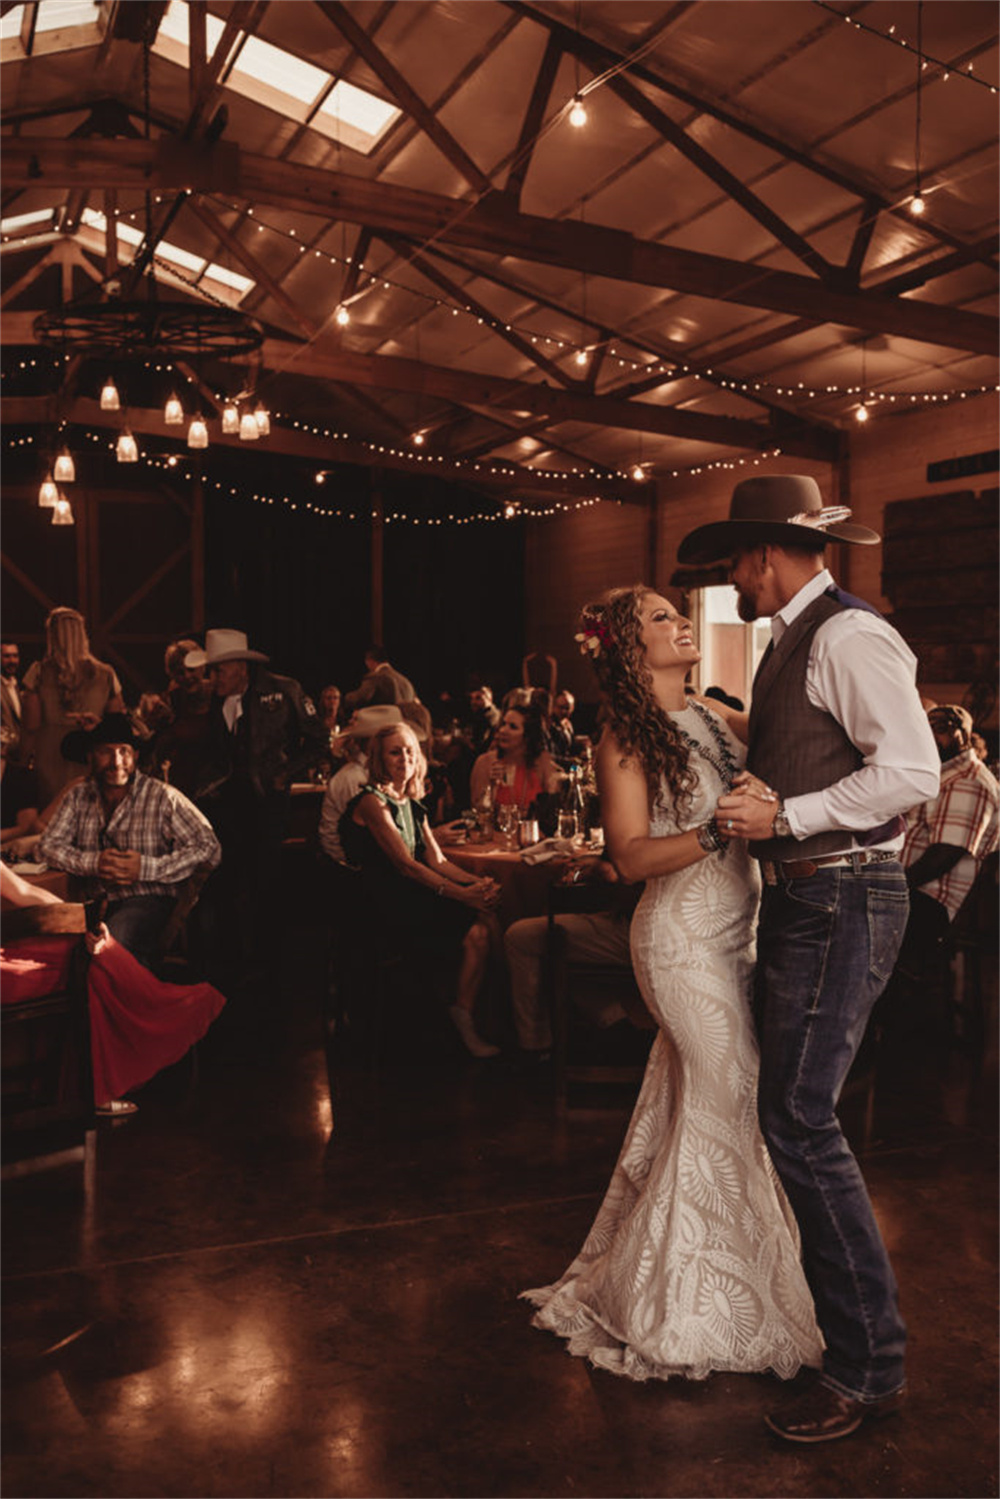 Elegant Country Wedding Dance Ideas